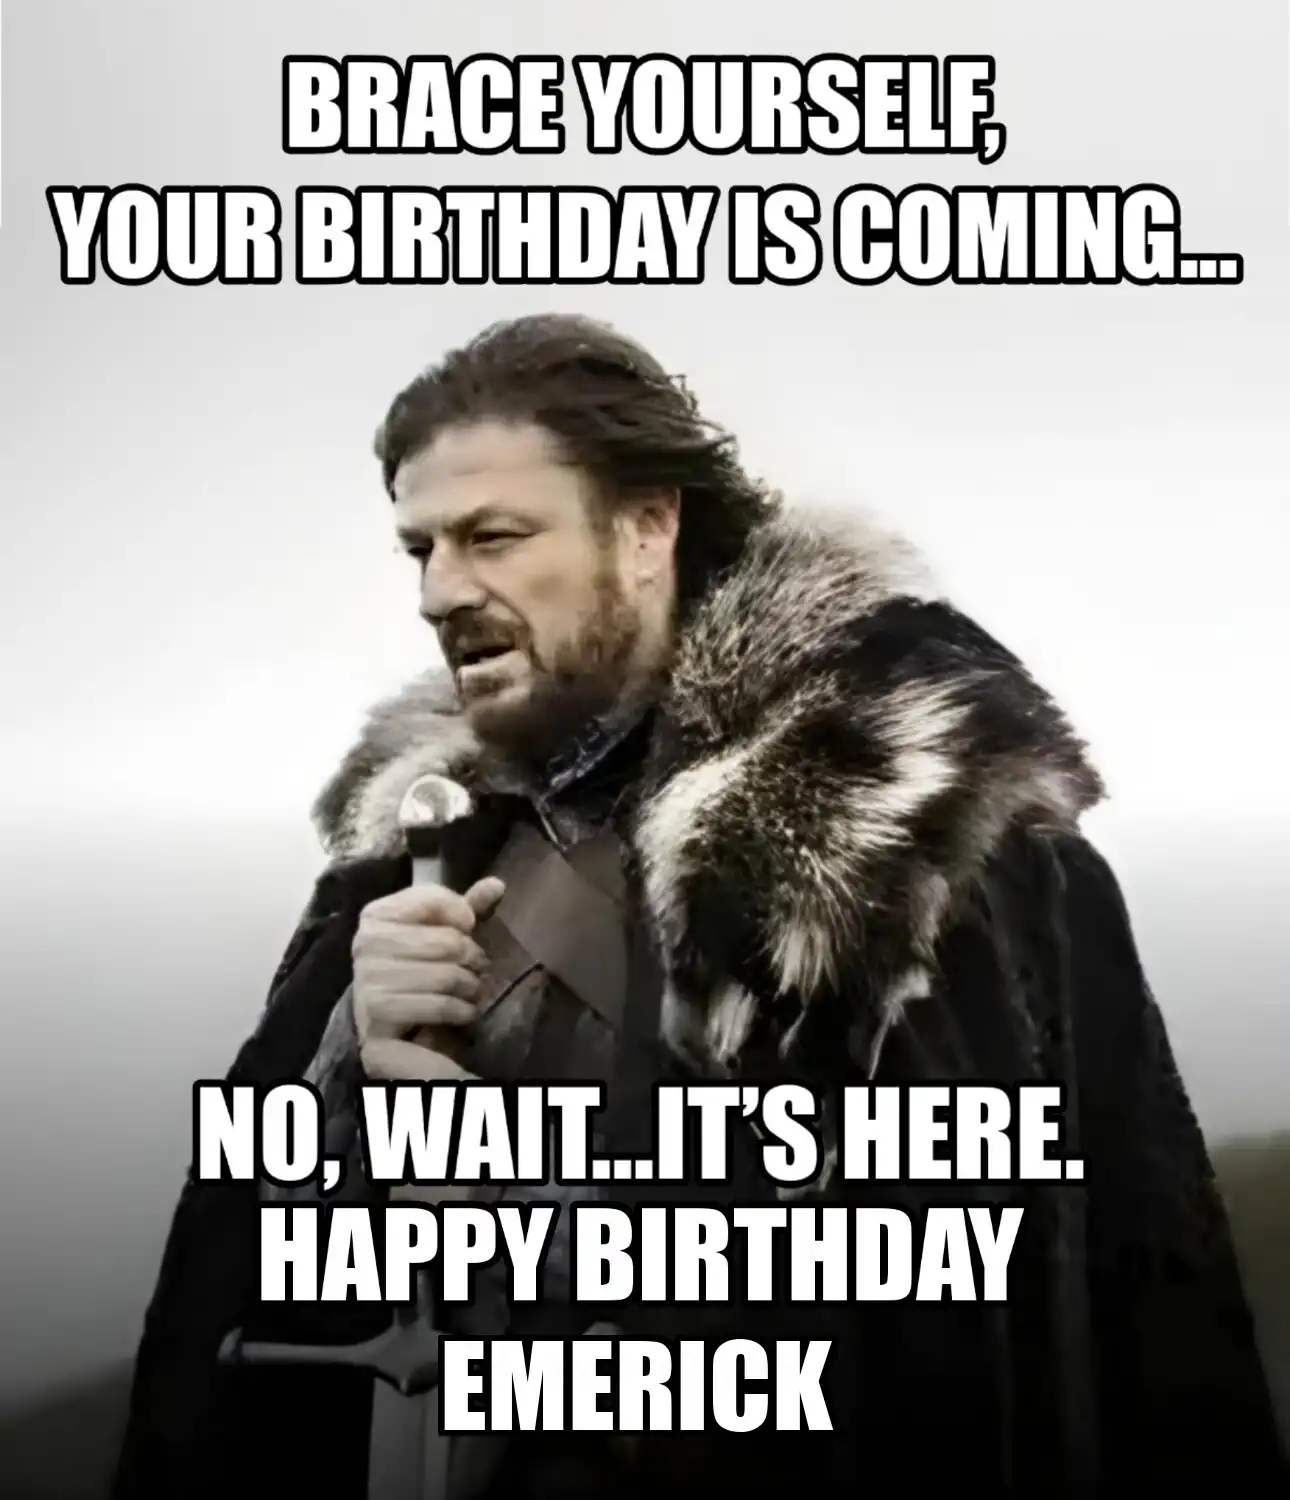 Happy Birthday Emerick Brace Yourself Your Birthday Is Coming Meme